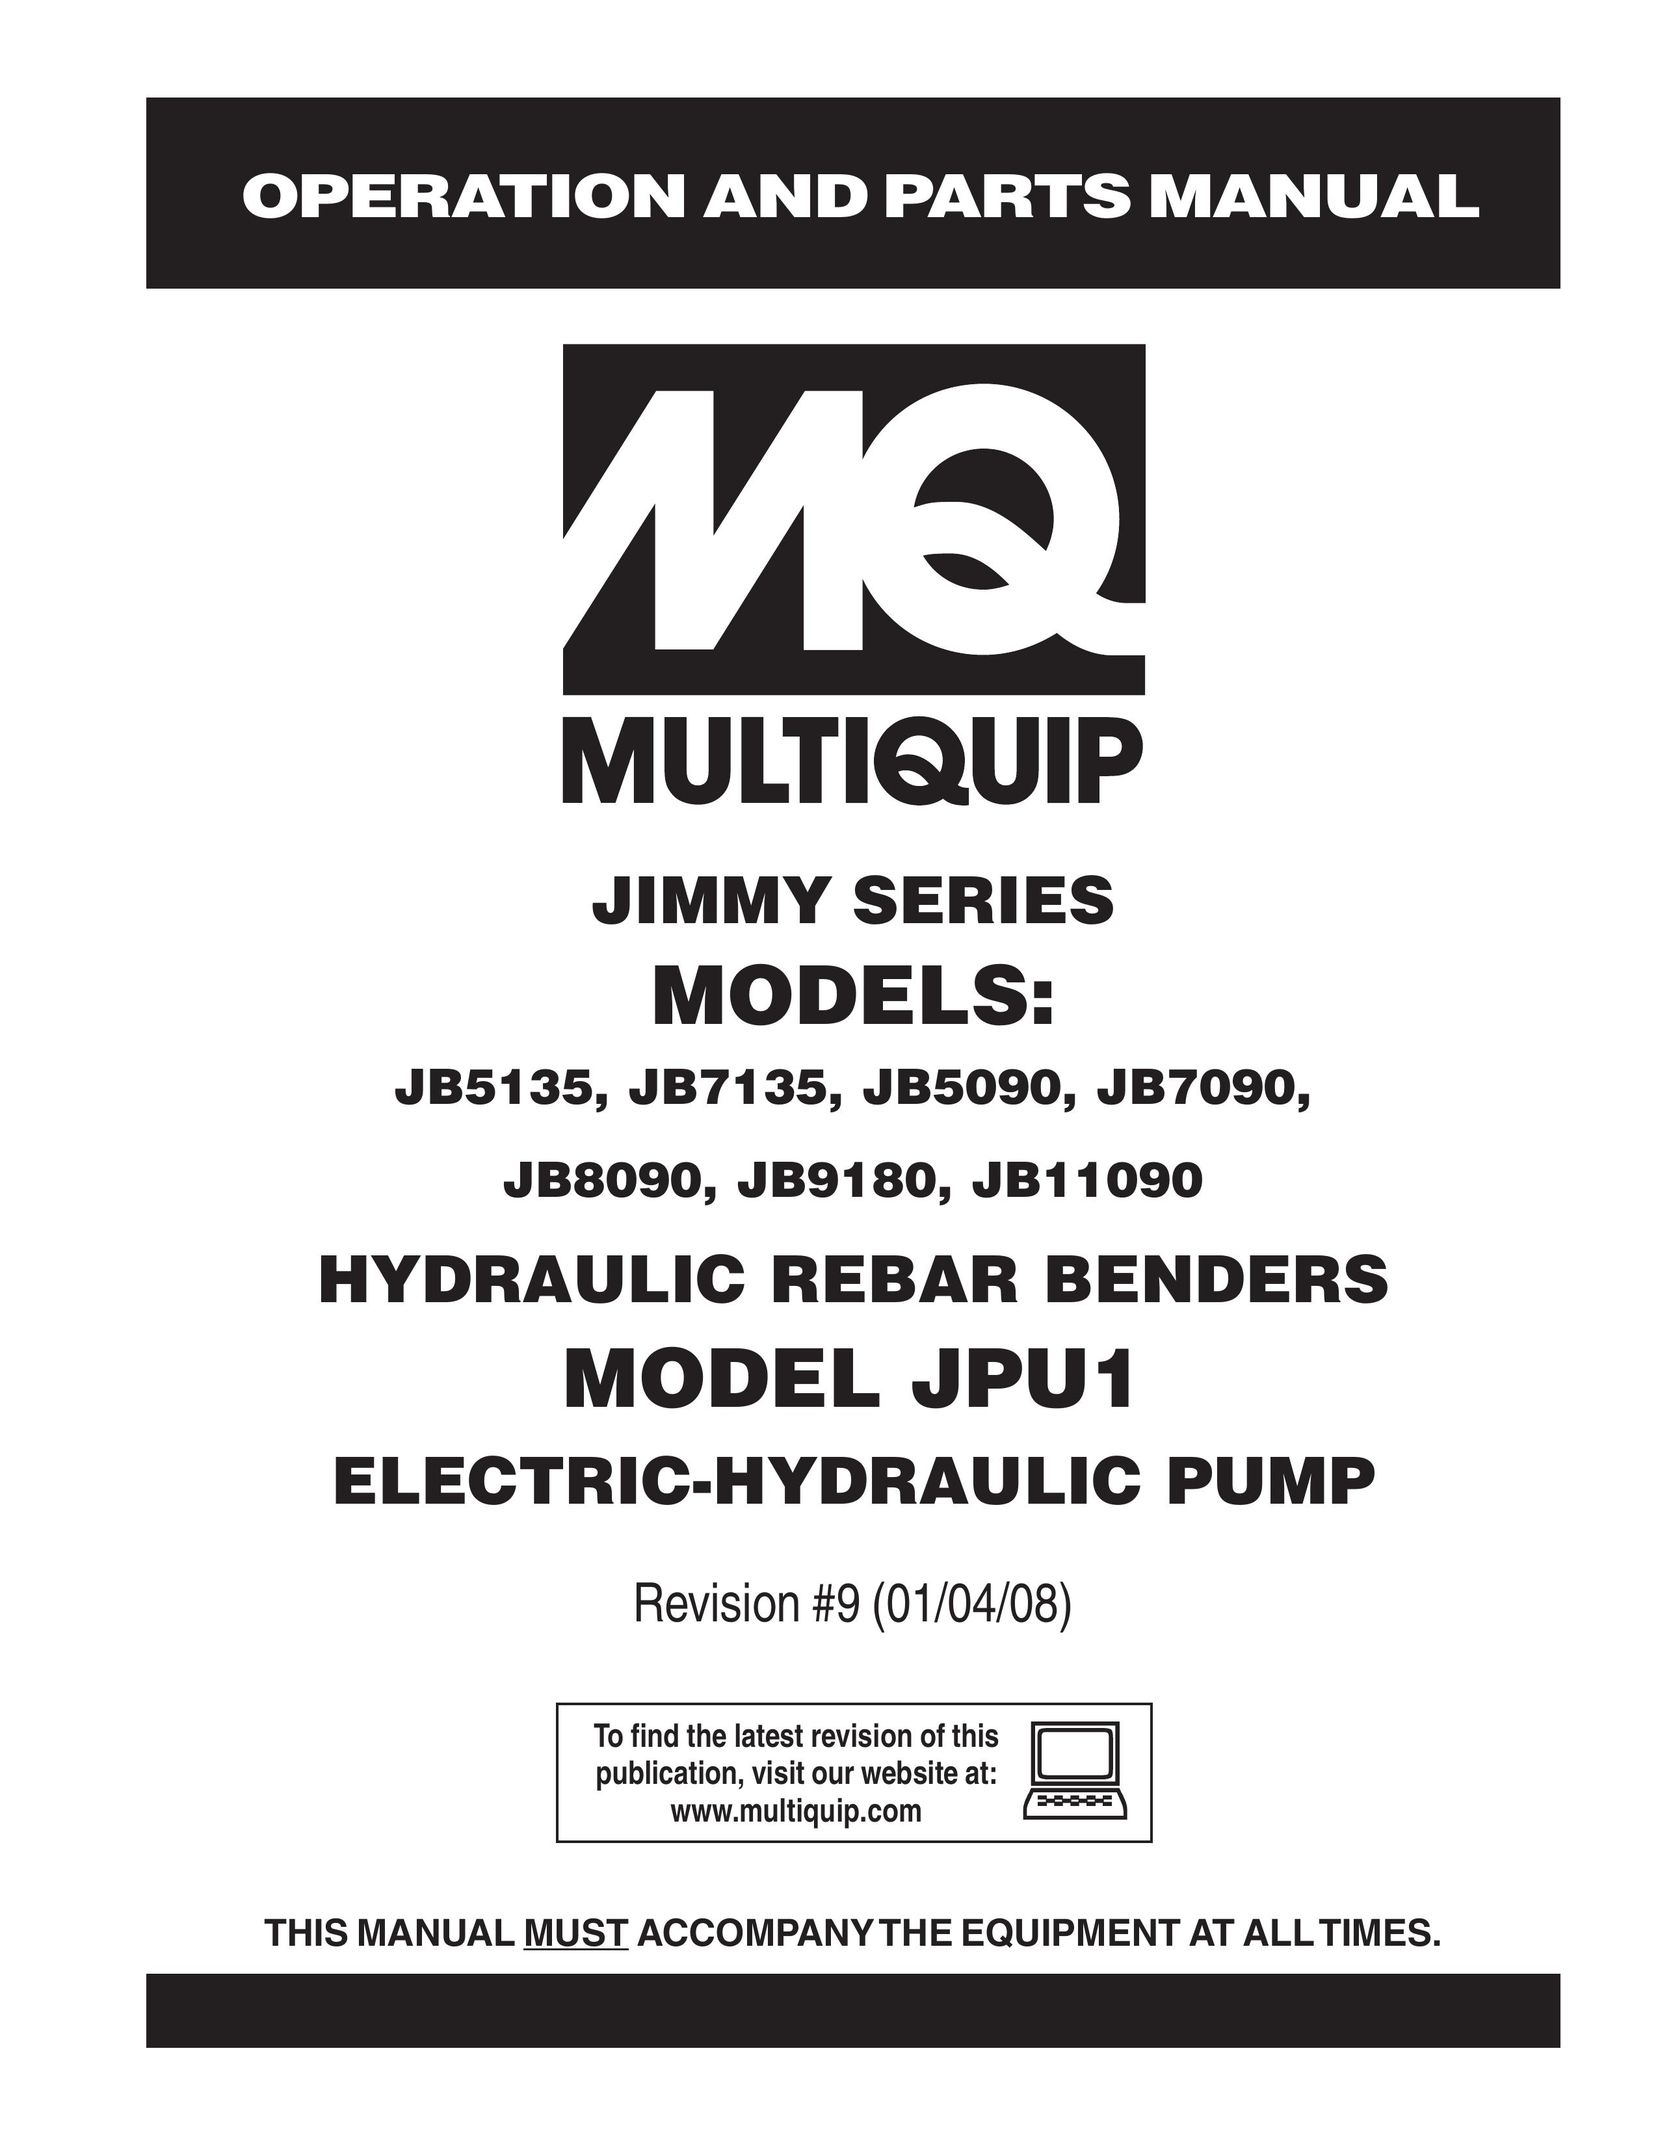 Multiquip JB7135 Heat Pump User Manual